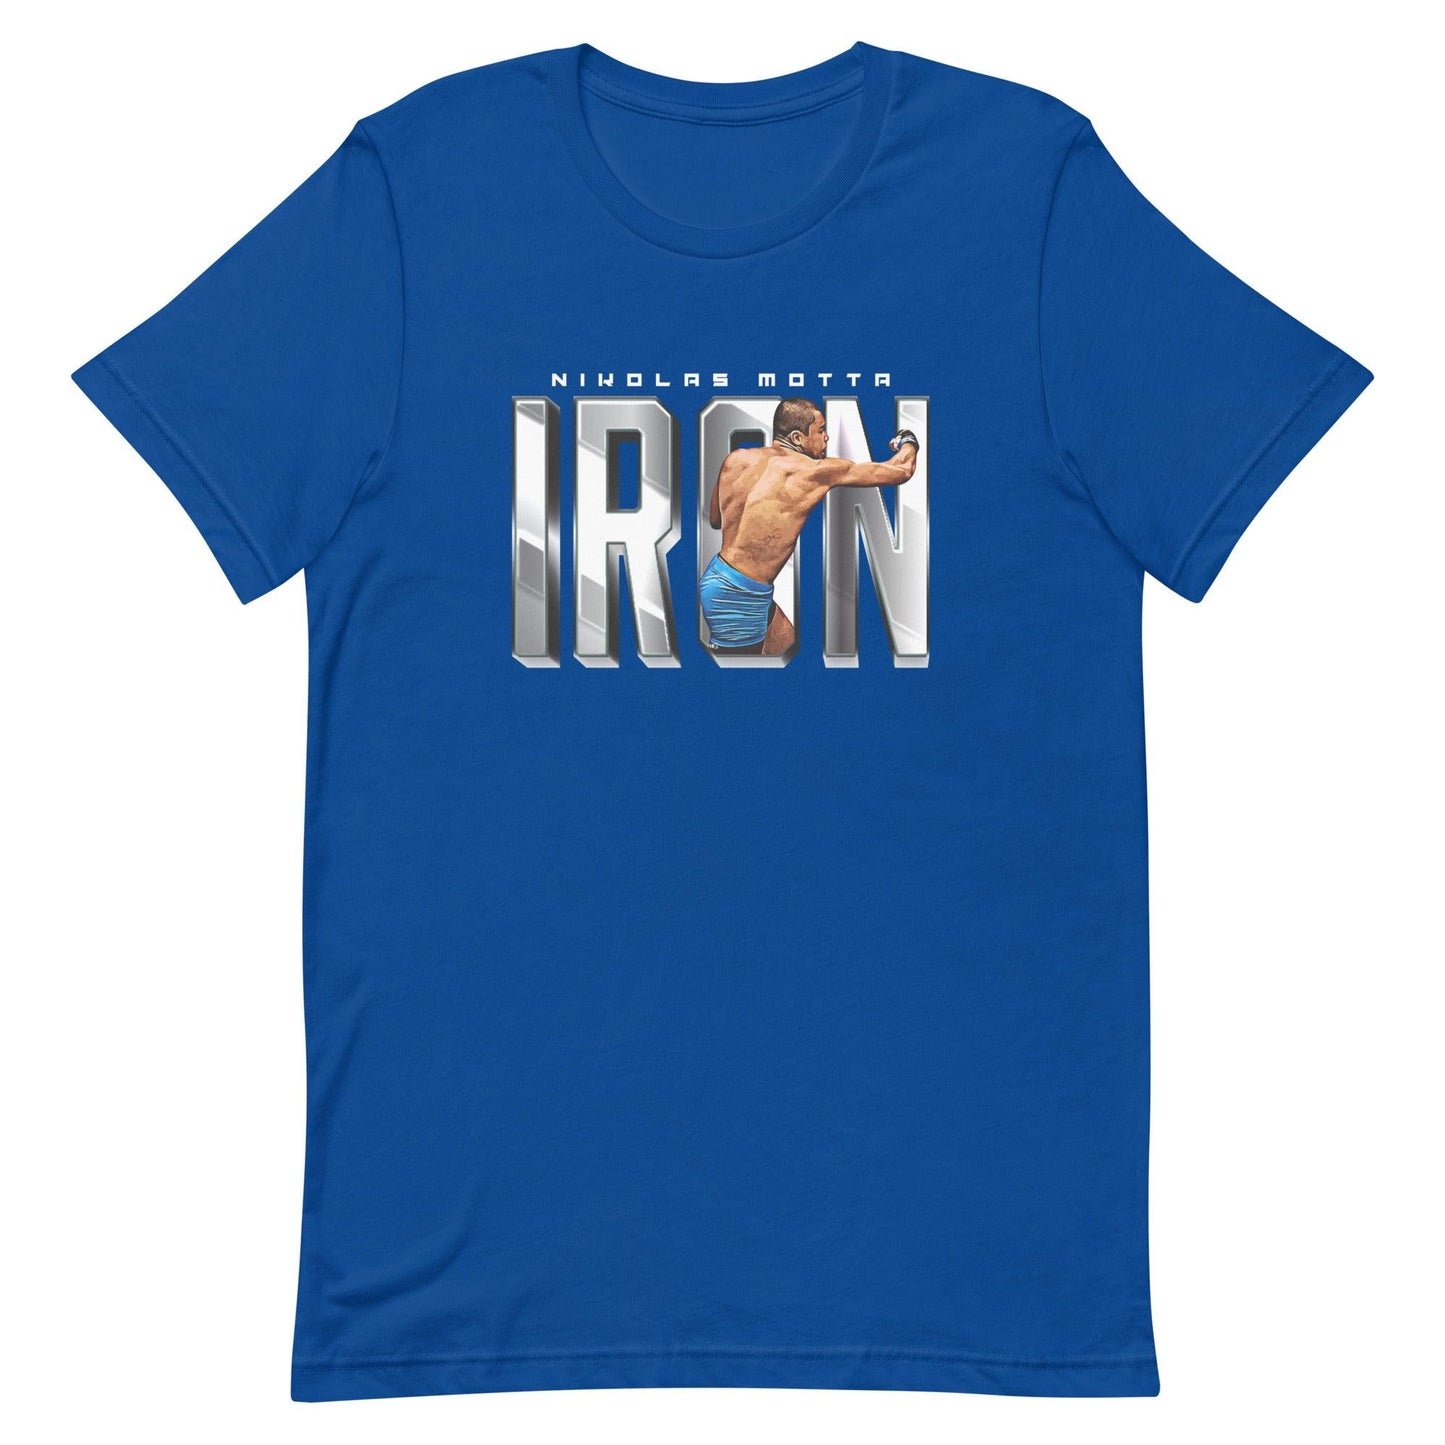 Nikolas Motta "IRON" t-shirt - Fan Arch